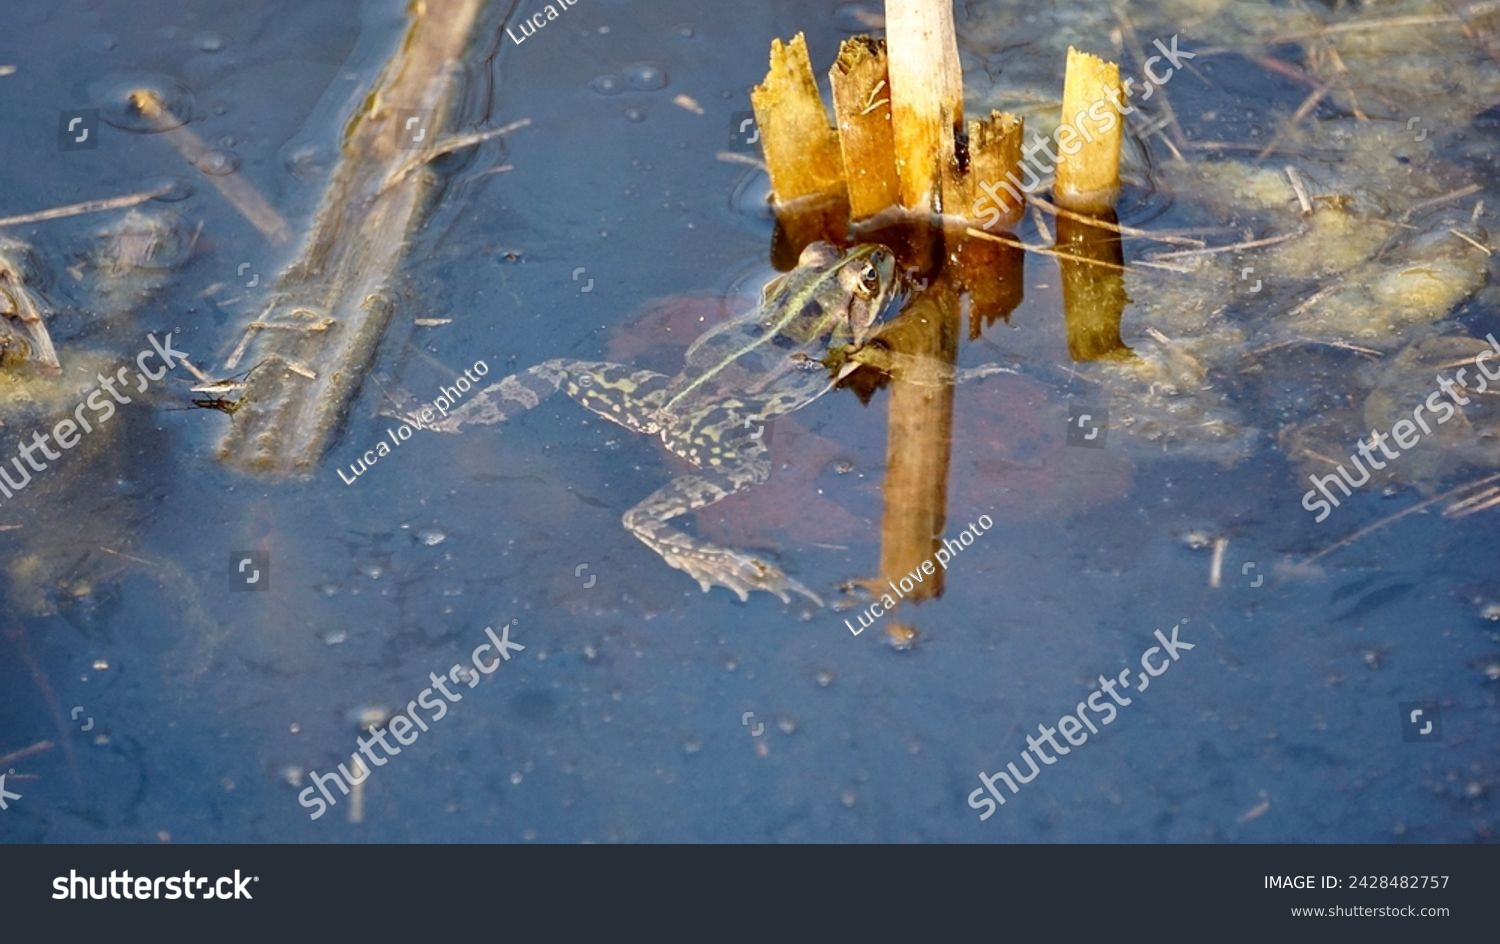 Ecology and behavior of Pelophylax ridibundus: The Marsh frog, at the pond. Winter season      #2428482757